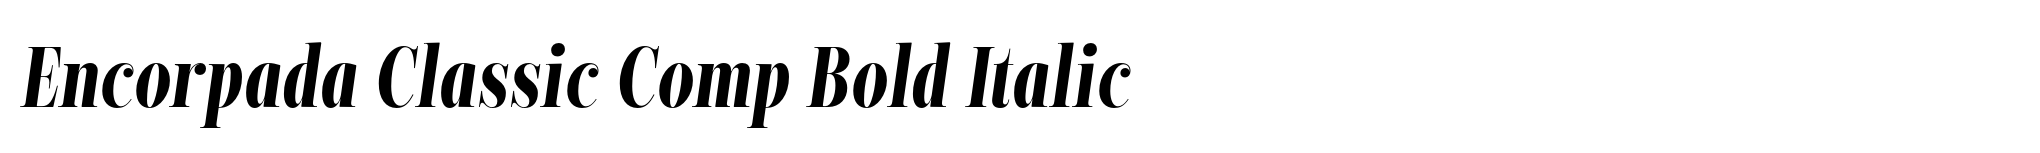 Encorpada Classic Comp Bold Italic image